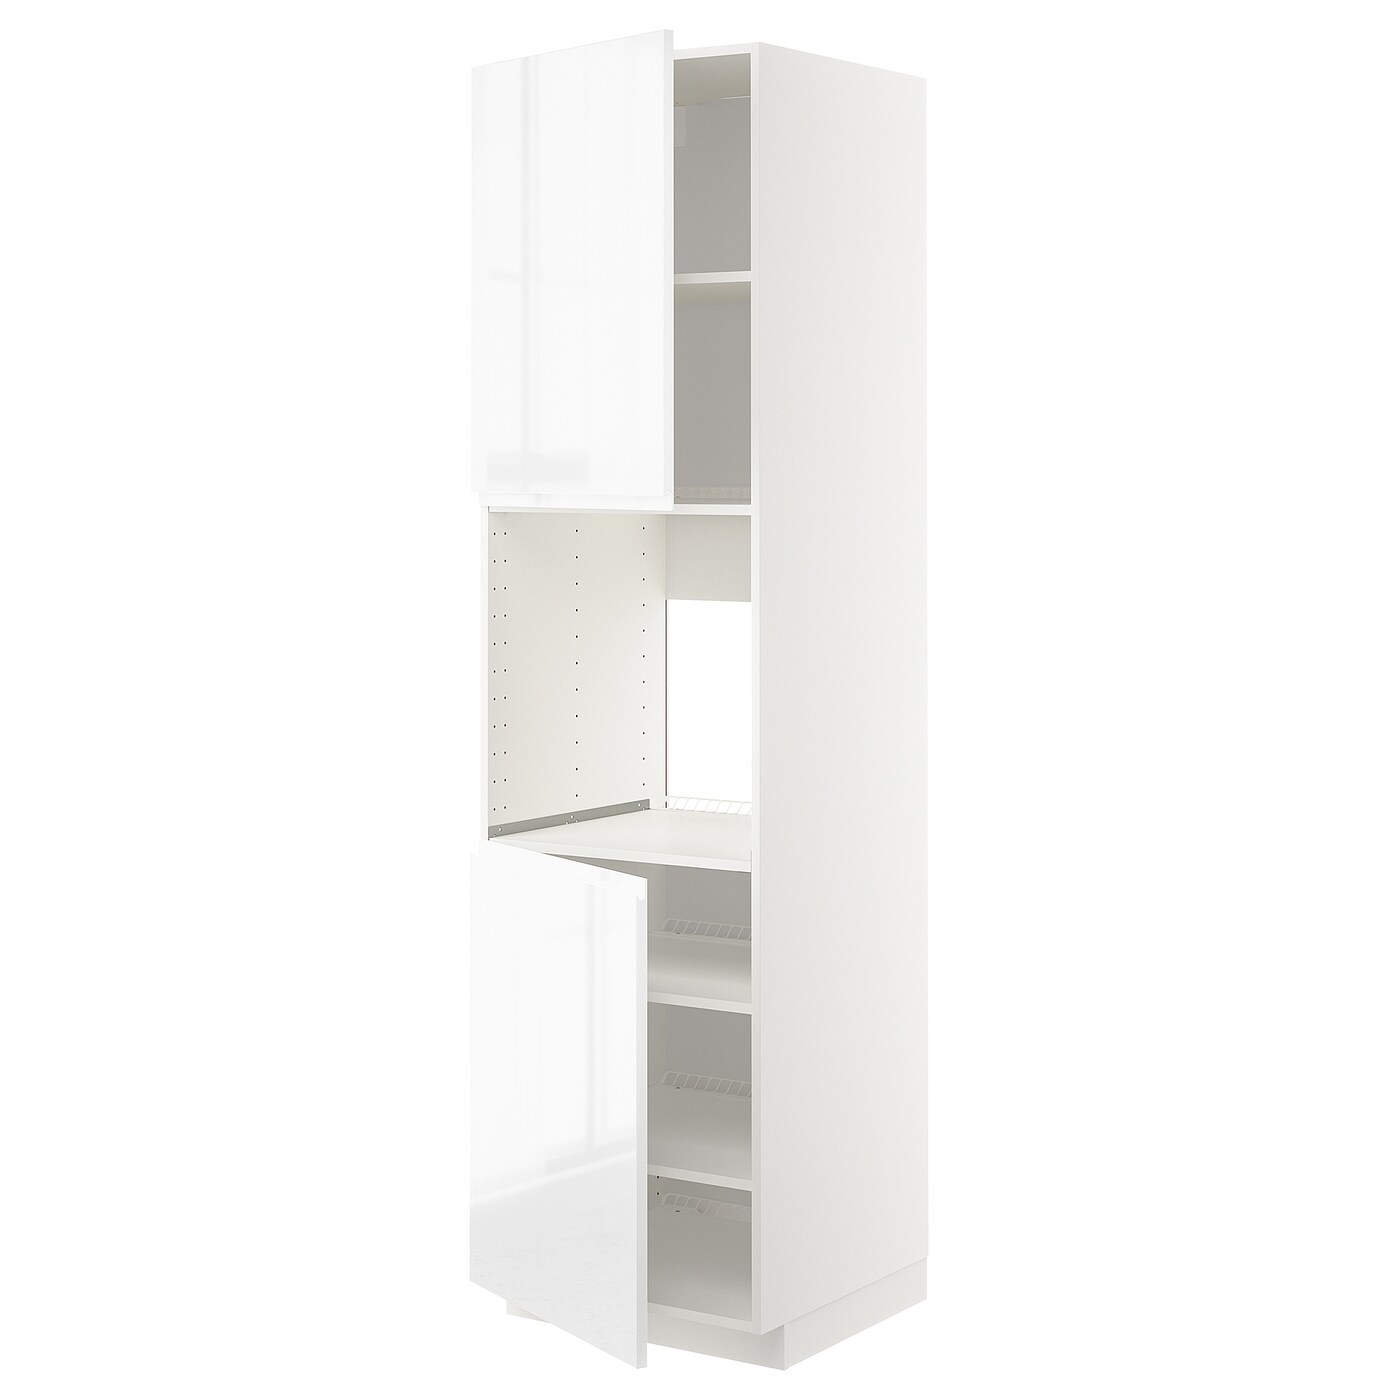 Высокий кухонный шкаф с полками - IKEA METOD/МЕТОД ИКЕА, 220х60х60 см, белый глянцевый